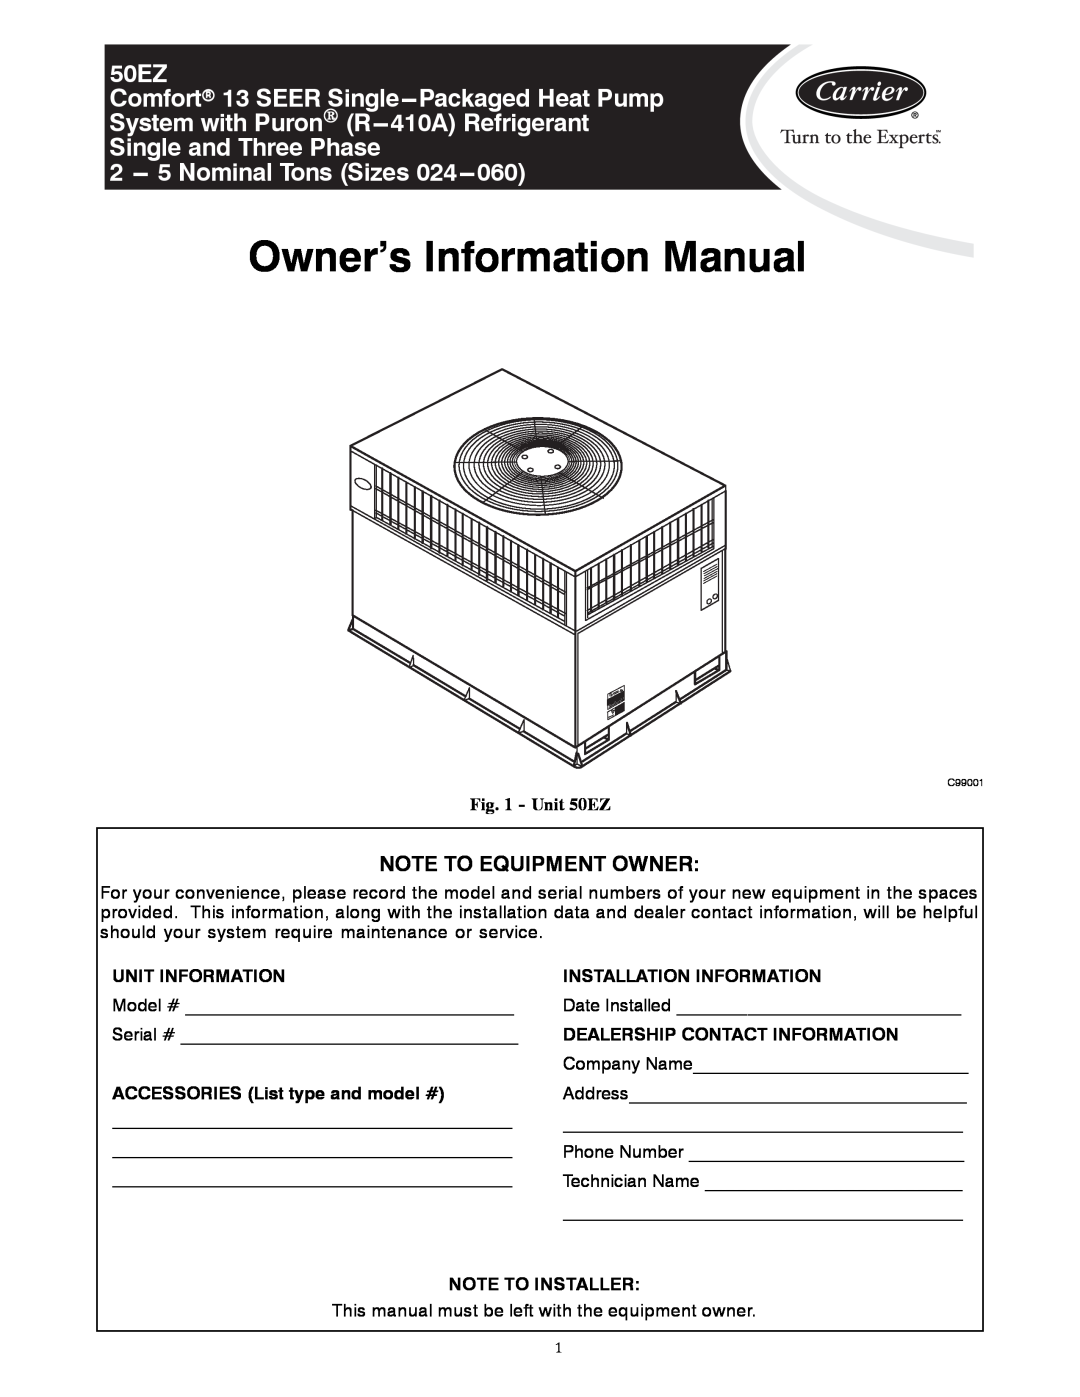 Carrier manual Unit 50EZ, Owner’s Information Manual, 50EZ Comfortr 13 SEER Single---PackagedHeat Pump 